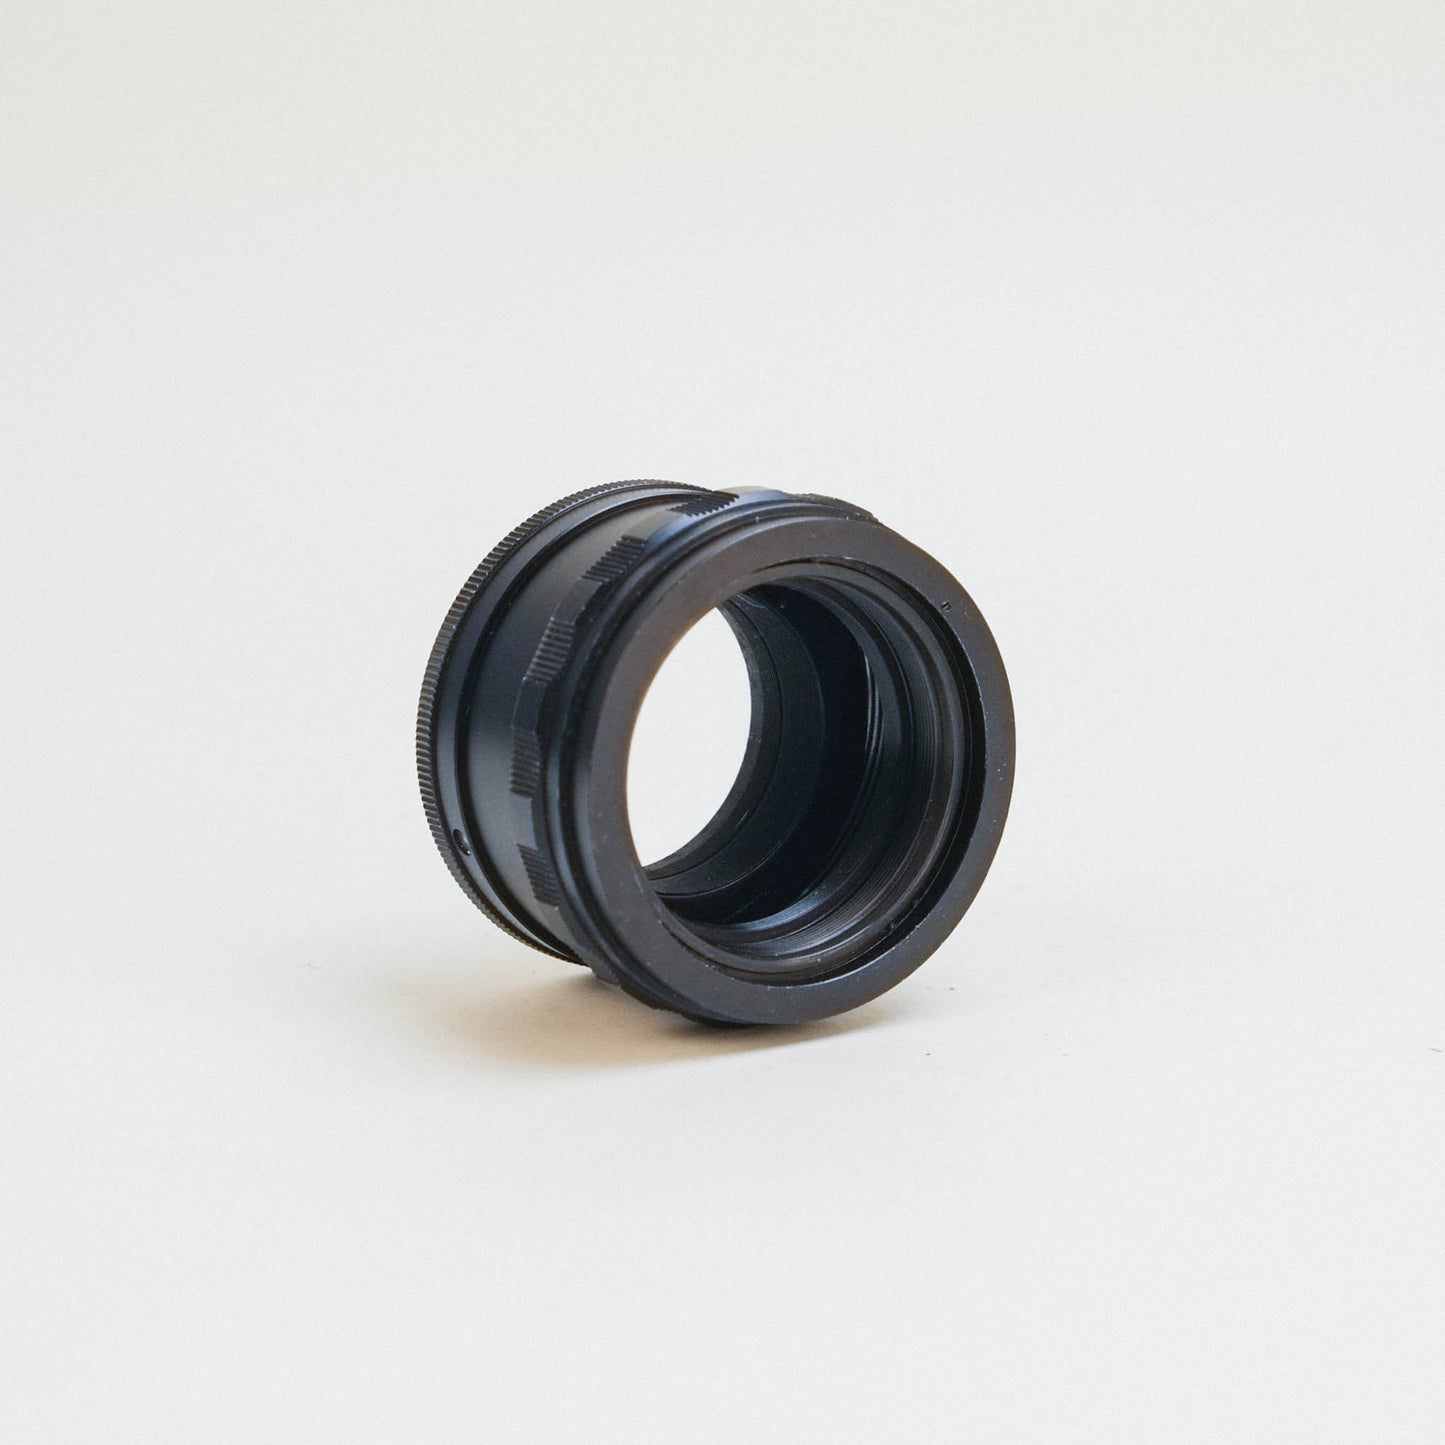 Leica Focusing Mount Adapter (16462)